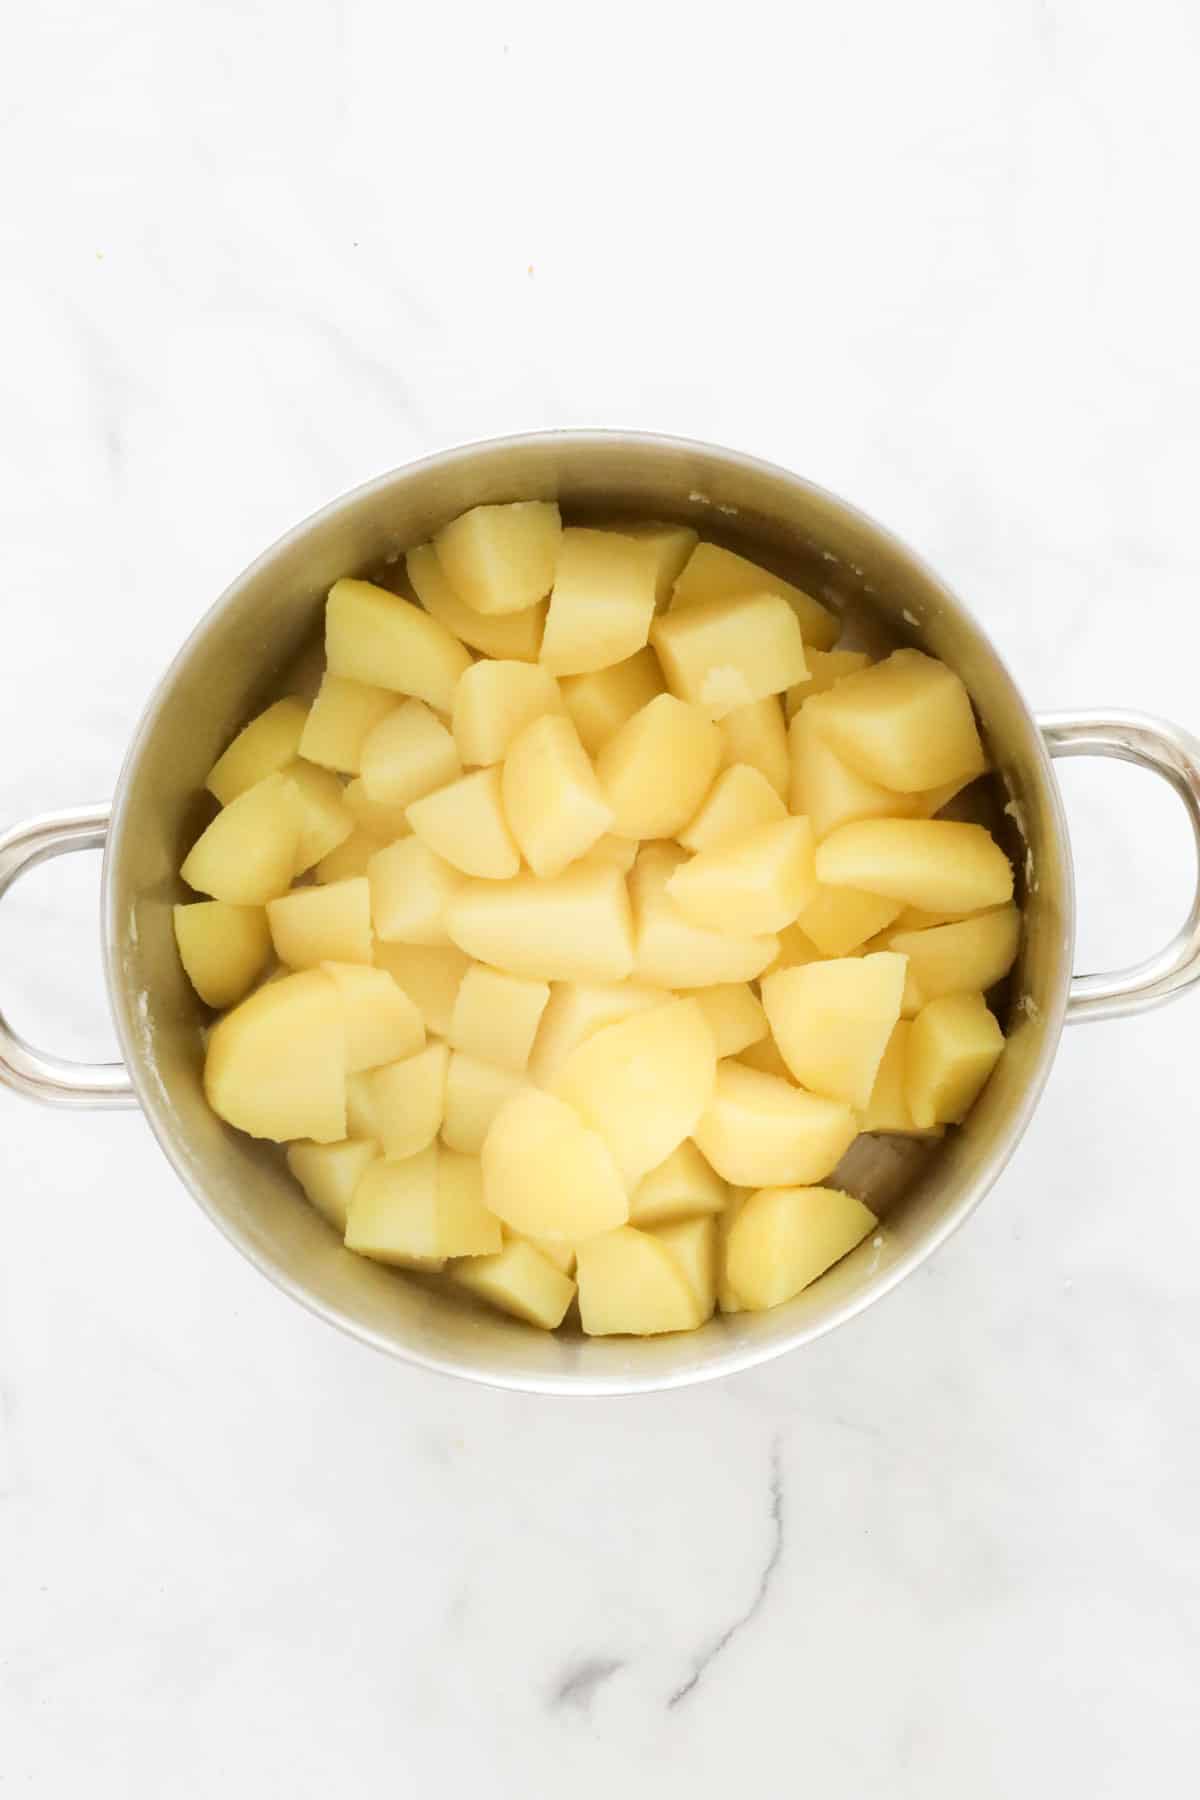 Chopped potatoes in a saucepan.